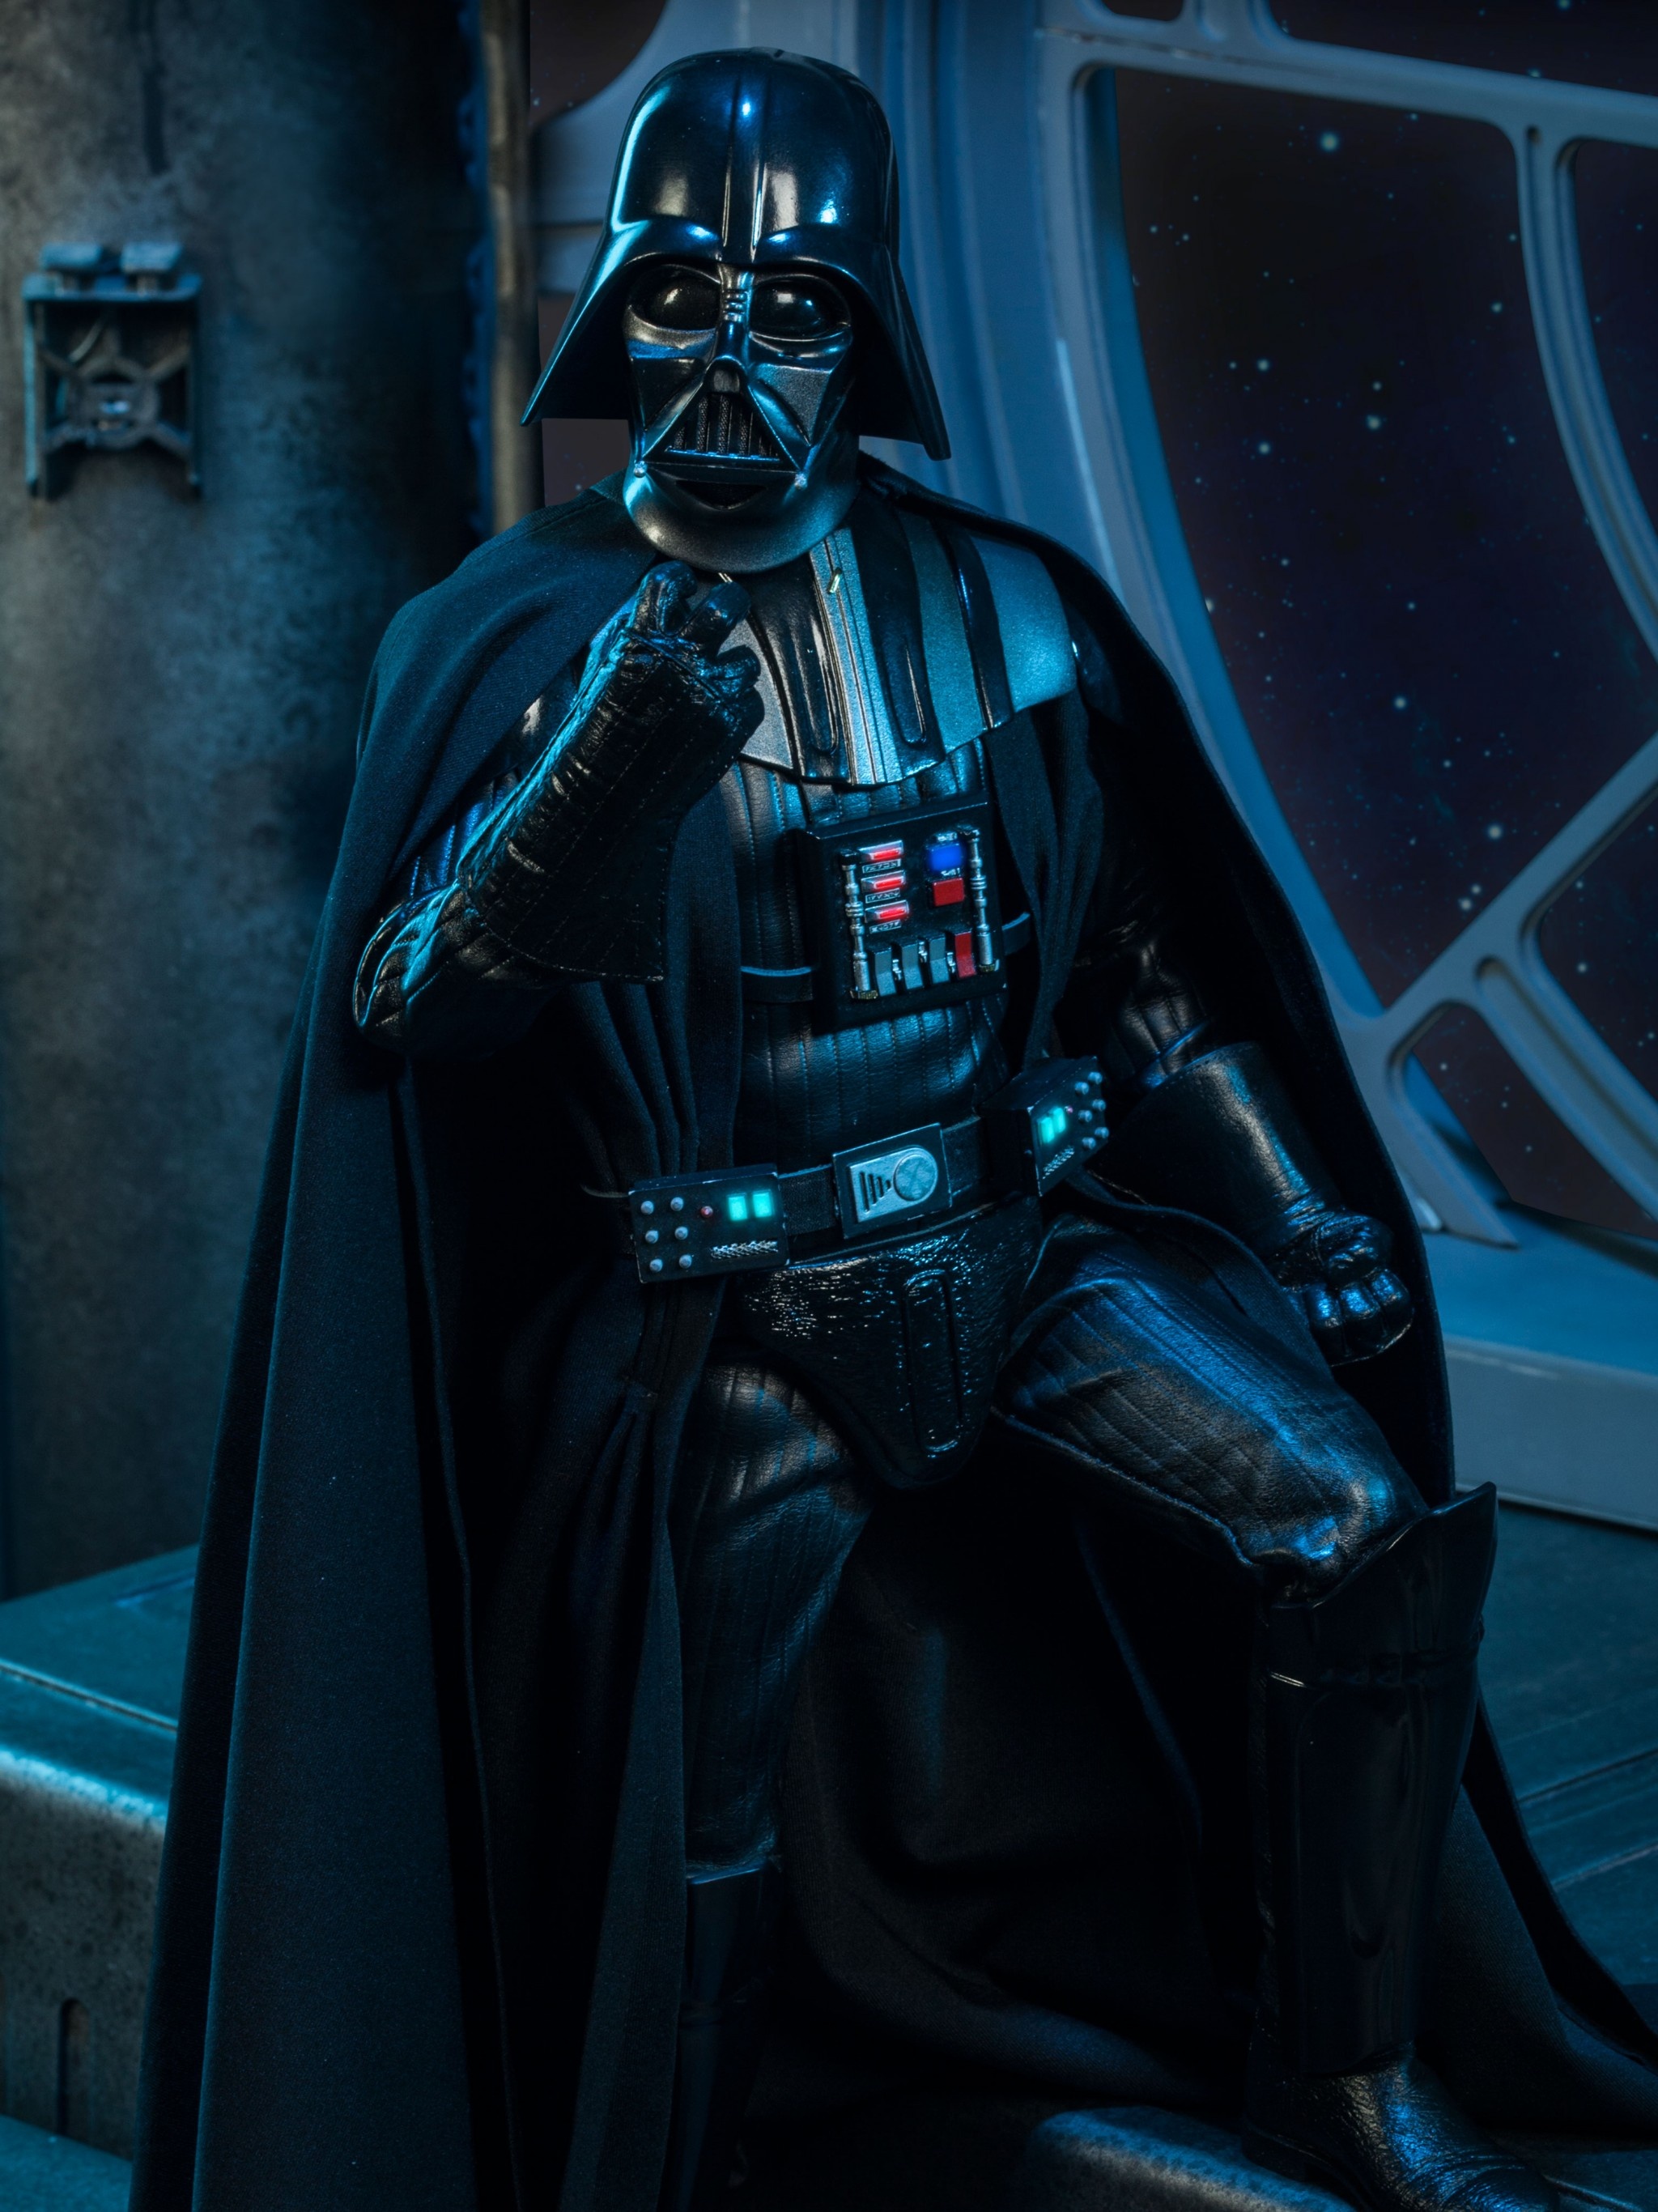 Darth Vader: Redeemed himself by saving his son, Luke Skywalker, and killing Palpatine. 2050x2740 HD Wallpaper.